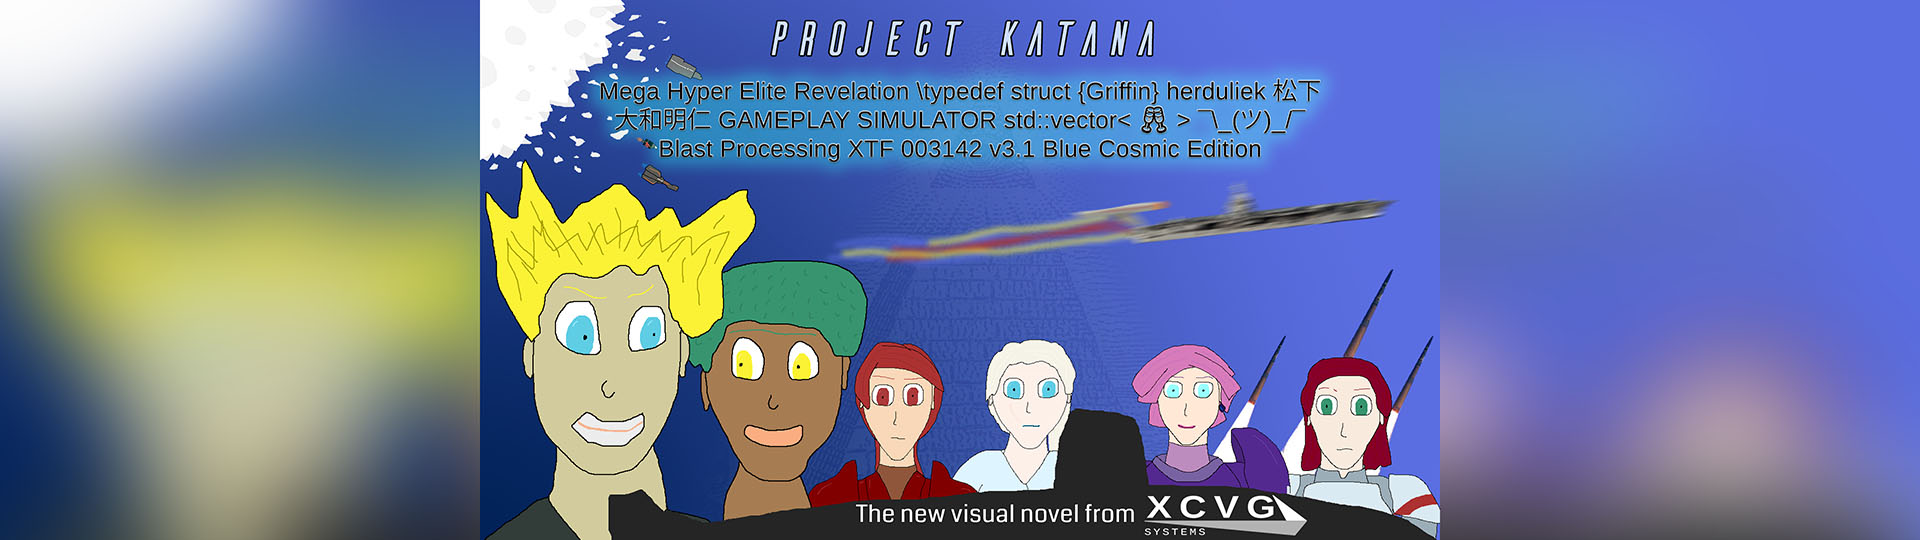 Project Katana Xcvg Systems